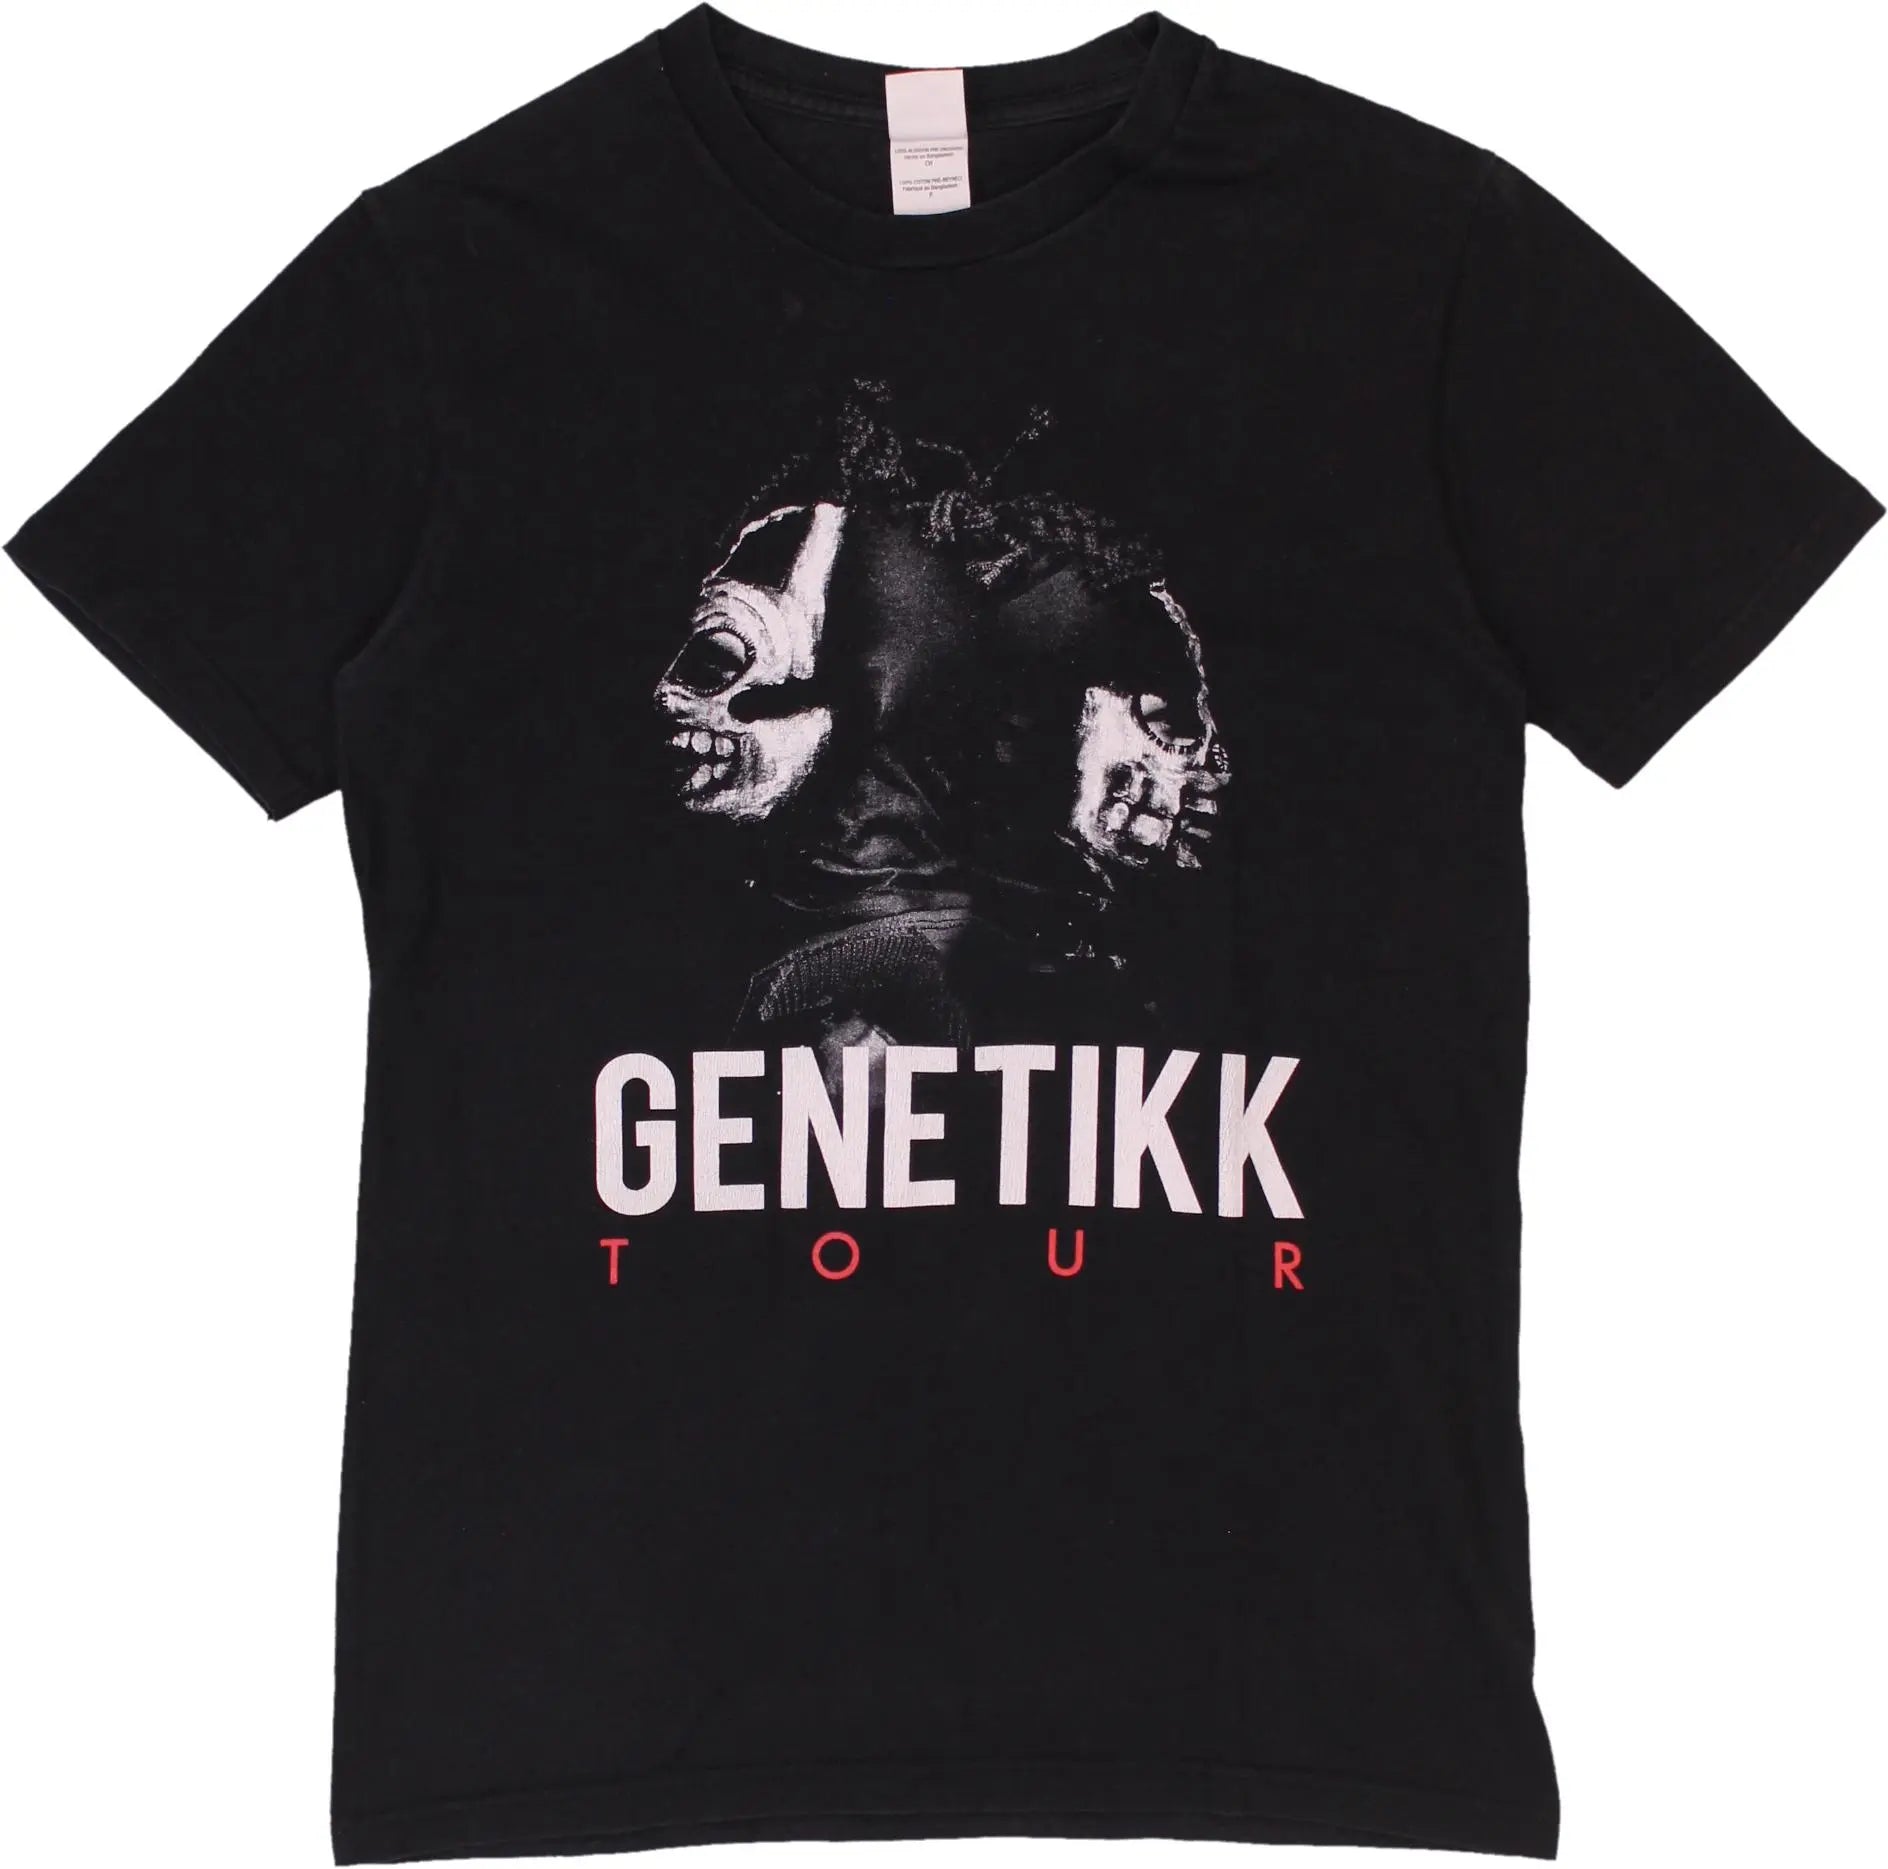 Gildan - Gentikk Band T-shirt- ThriftTale.com - Vintage and second handclothing